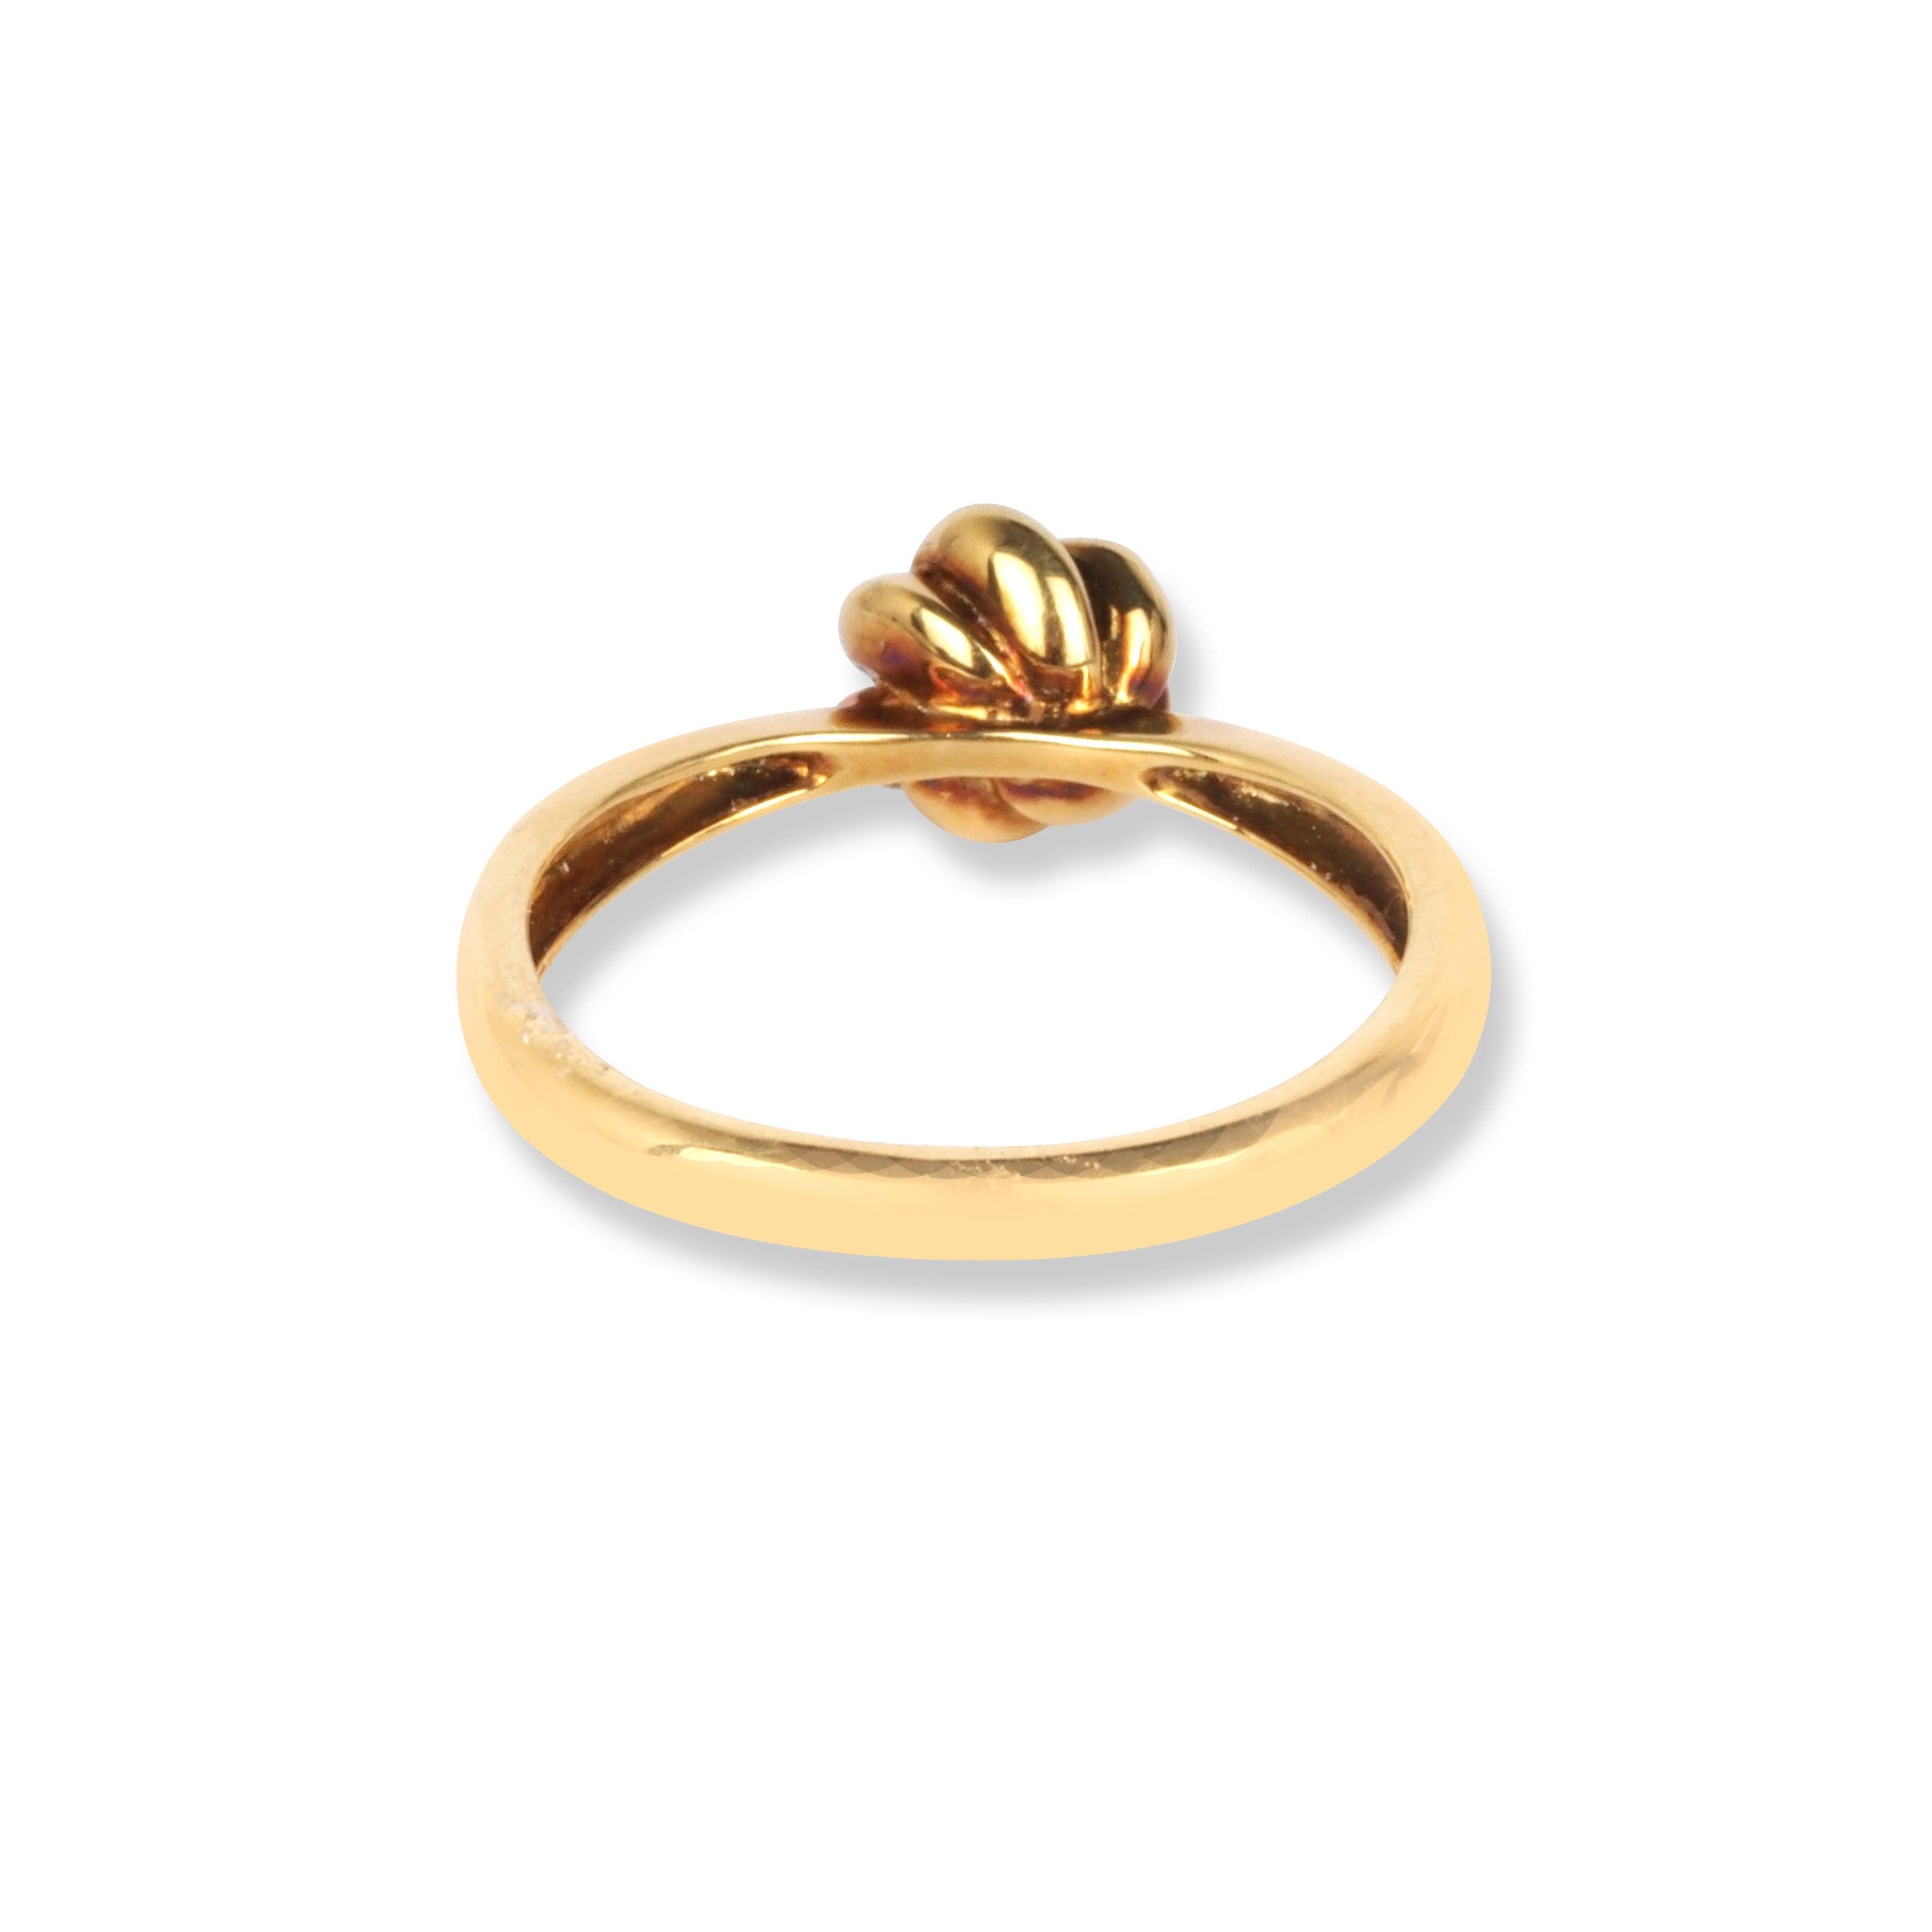 18ct Yellow Gold Flower Design Diamond Ring YPR4899A - Minar Jewellers